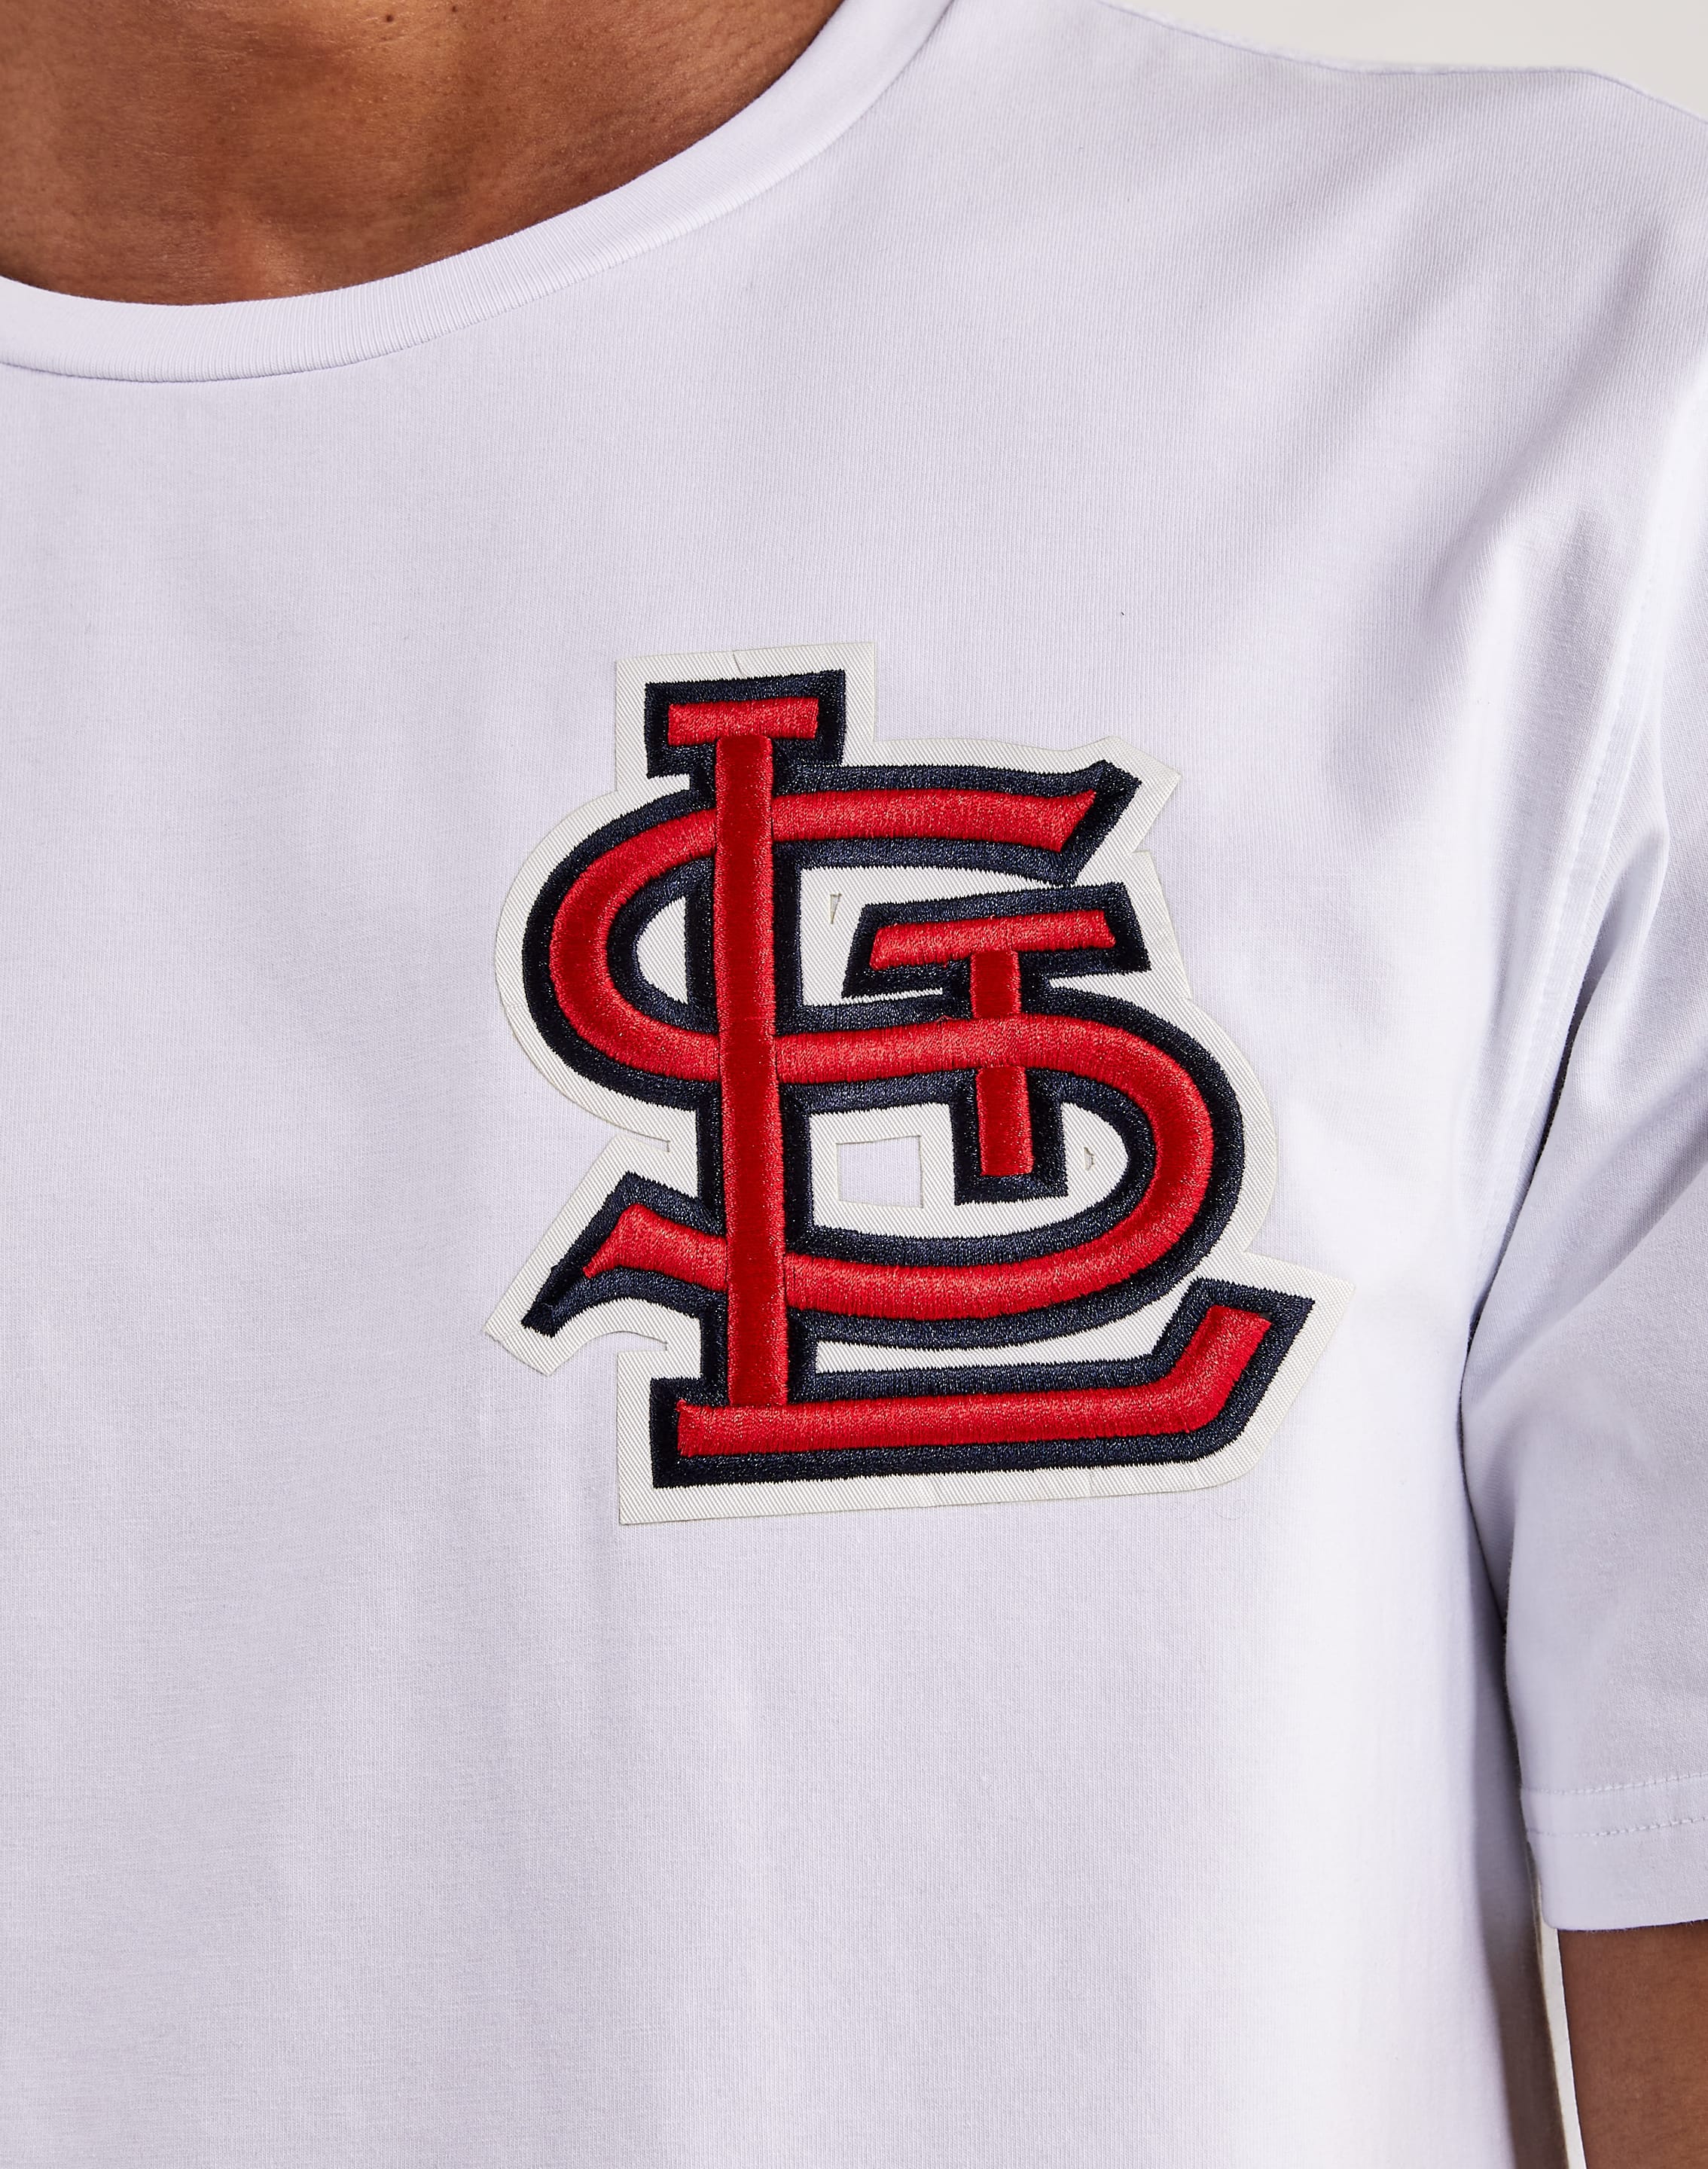 Pro Standard St. Louis Cardinals Team Shop 